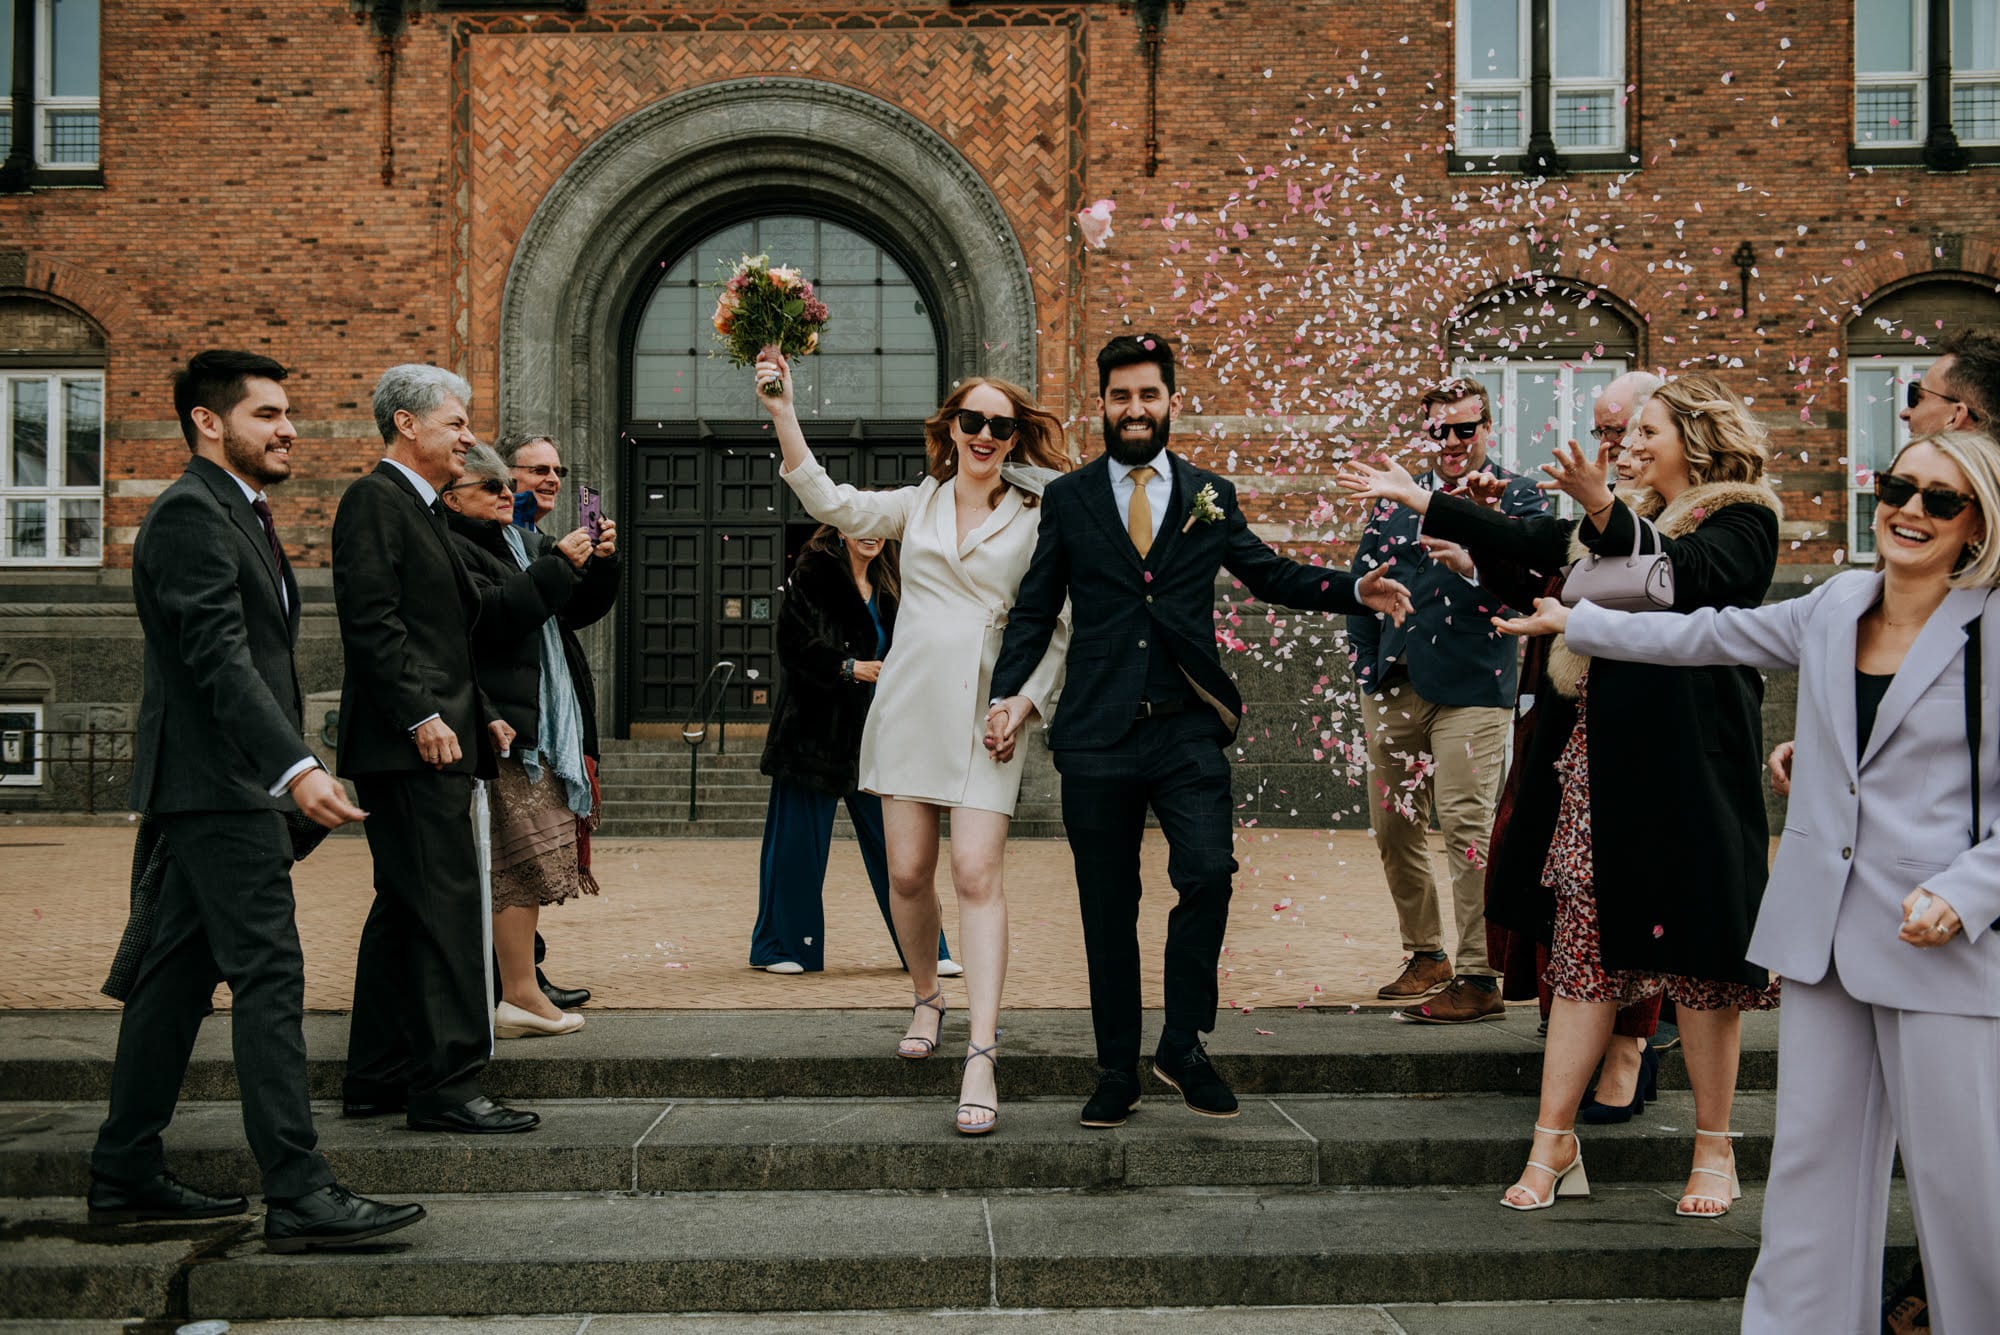 Wedding photographer Copenhagen Justyna Dura 16 Getting Married in Denmark